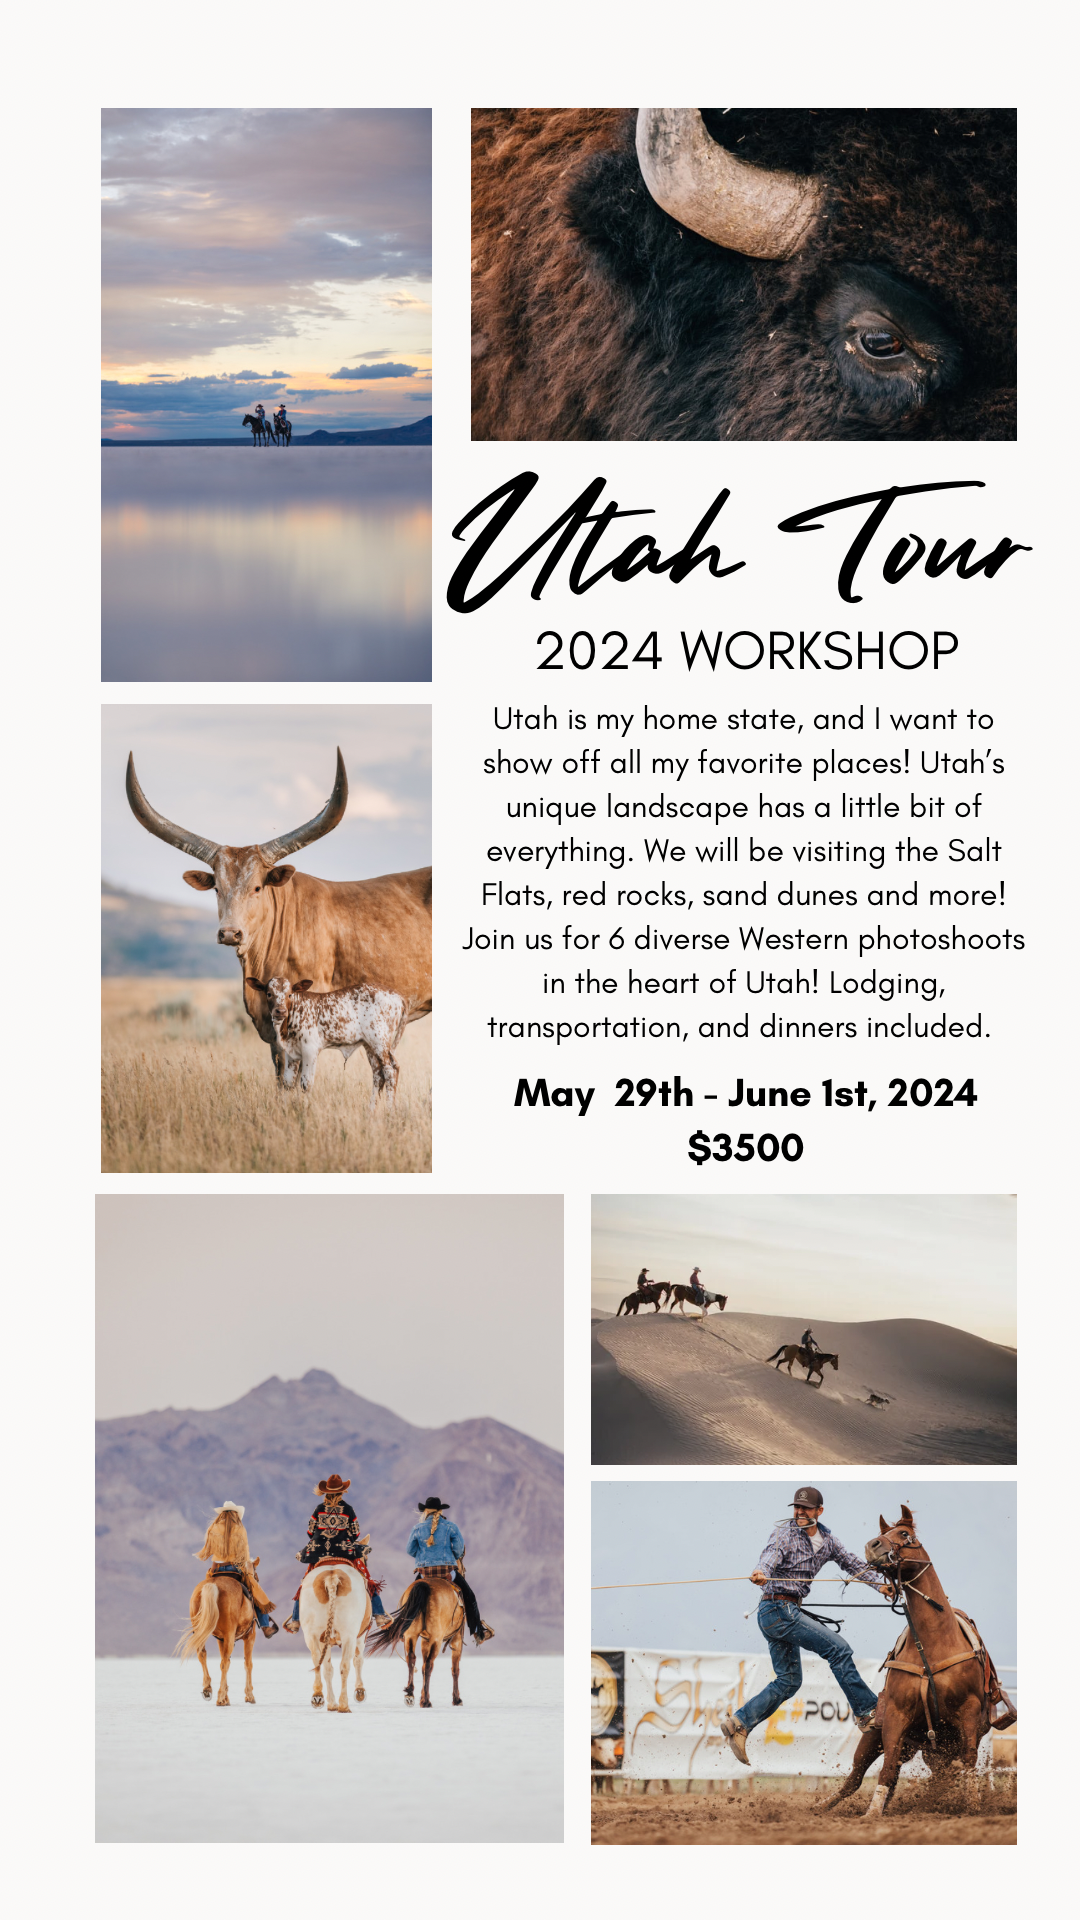 Utah Tours Workshop 2024 Ticket